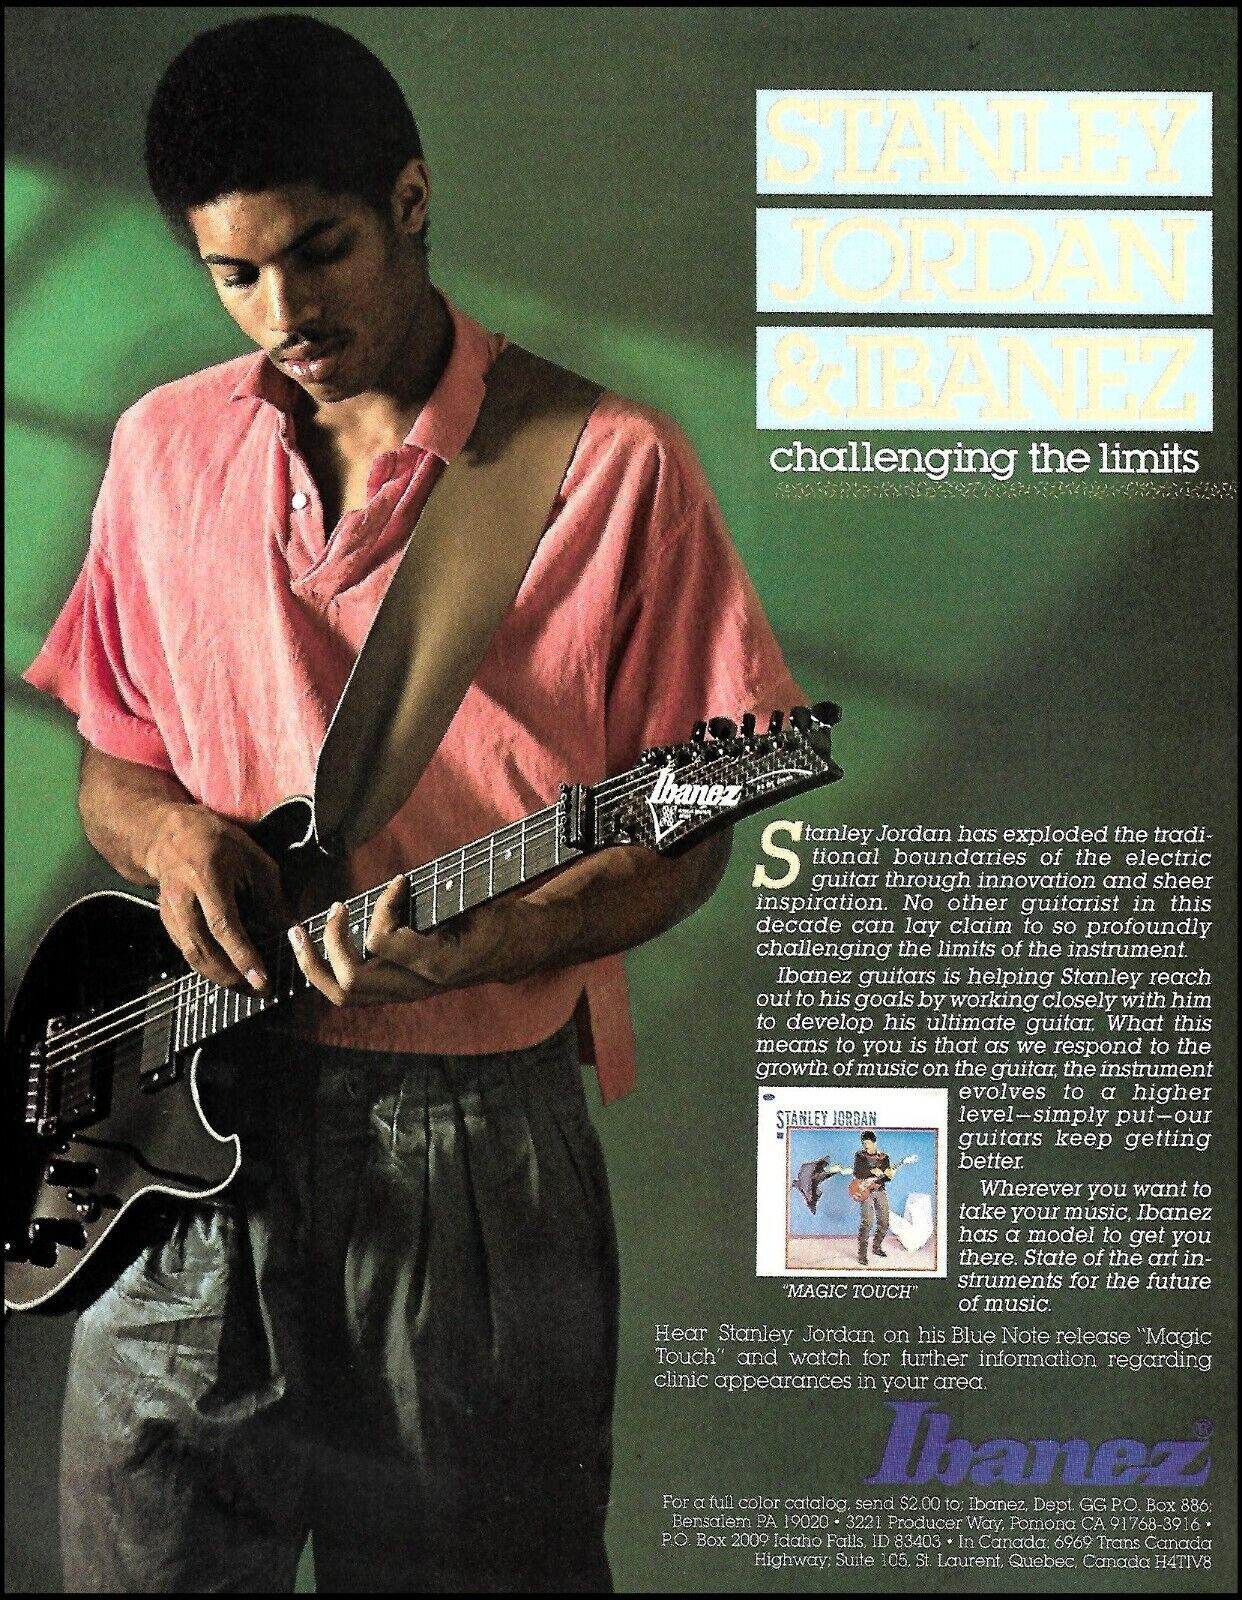 Stanley Jordan 1985 Ibanez black guitar ad 8 x 11 advertisement print